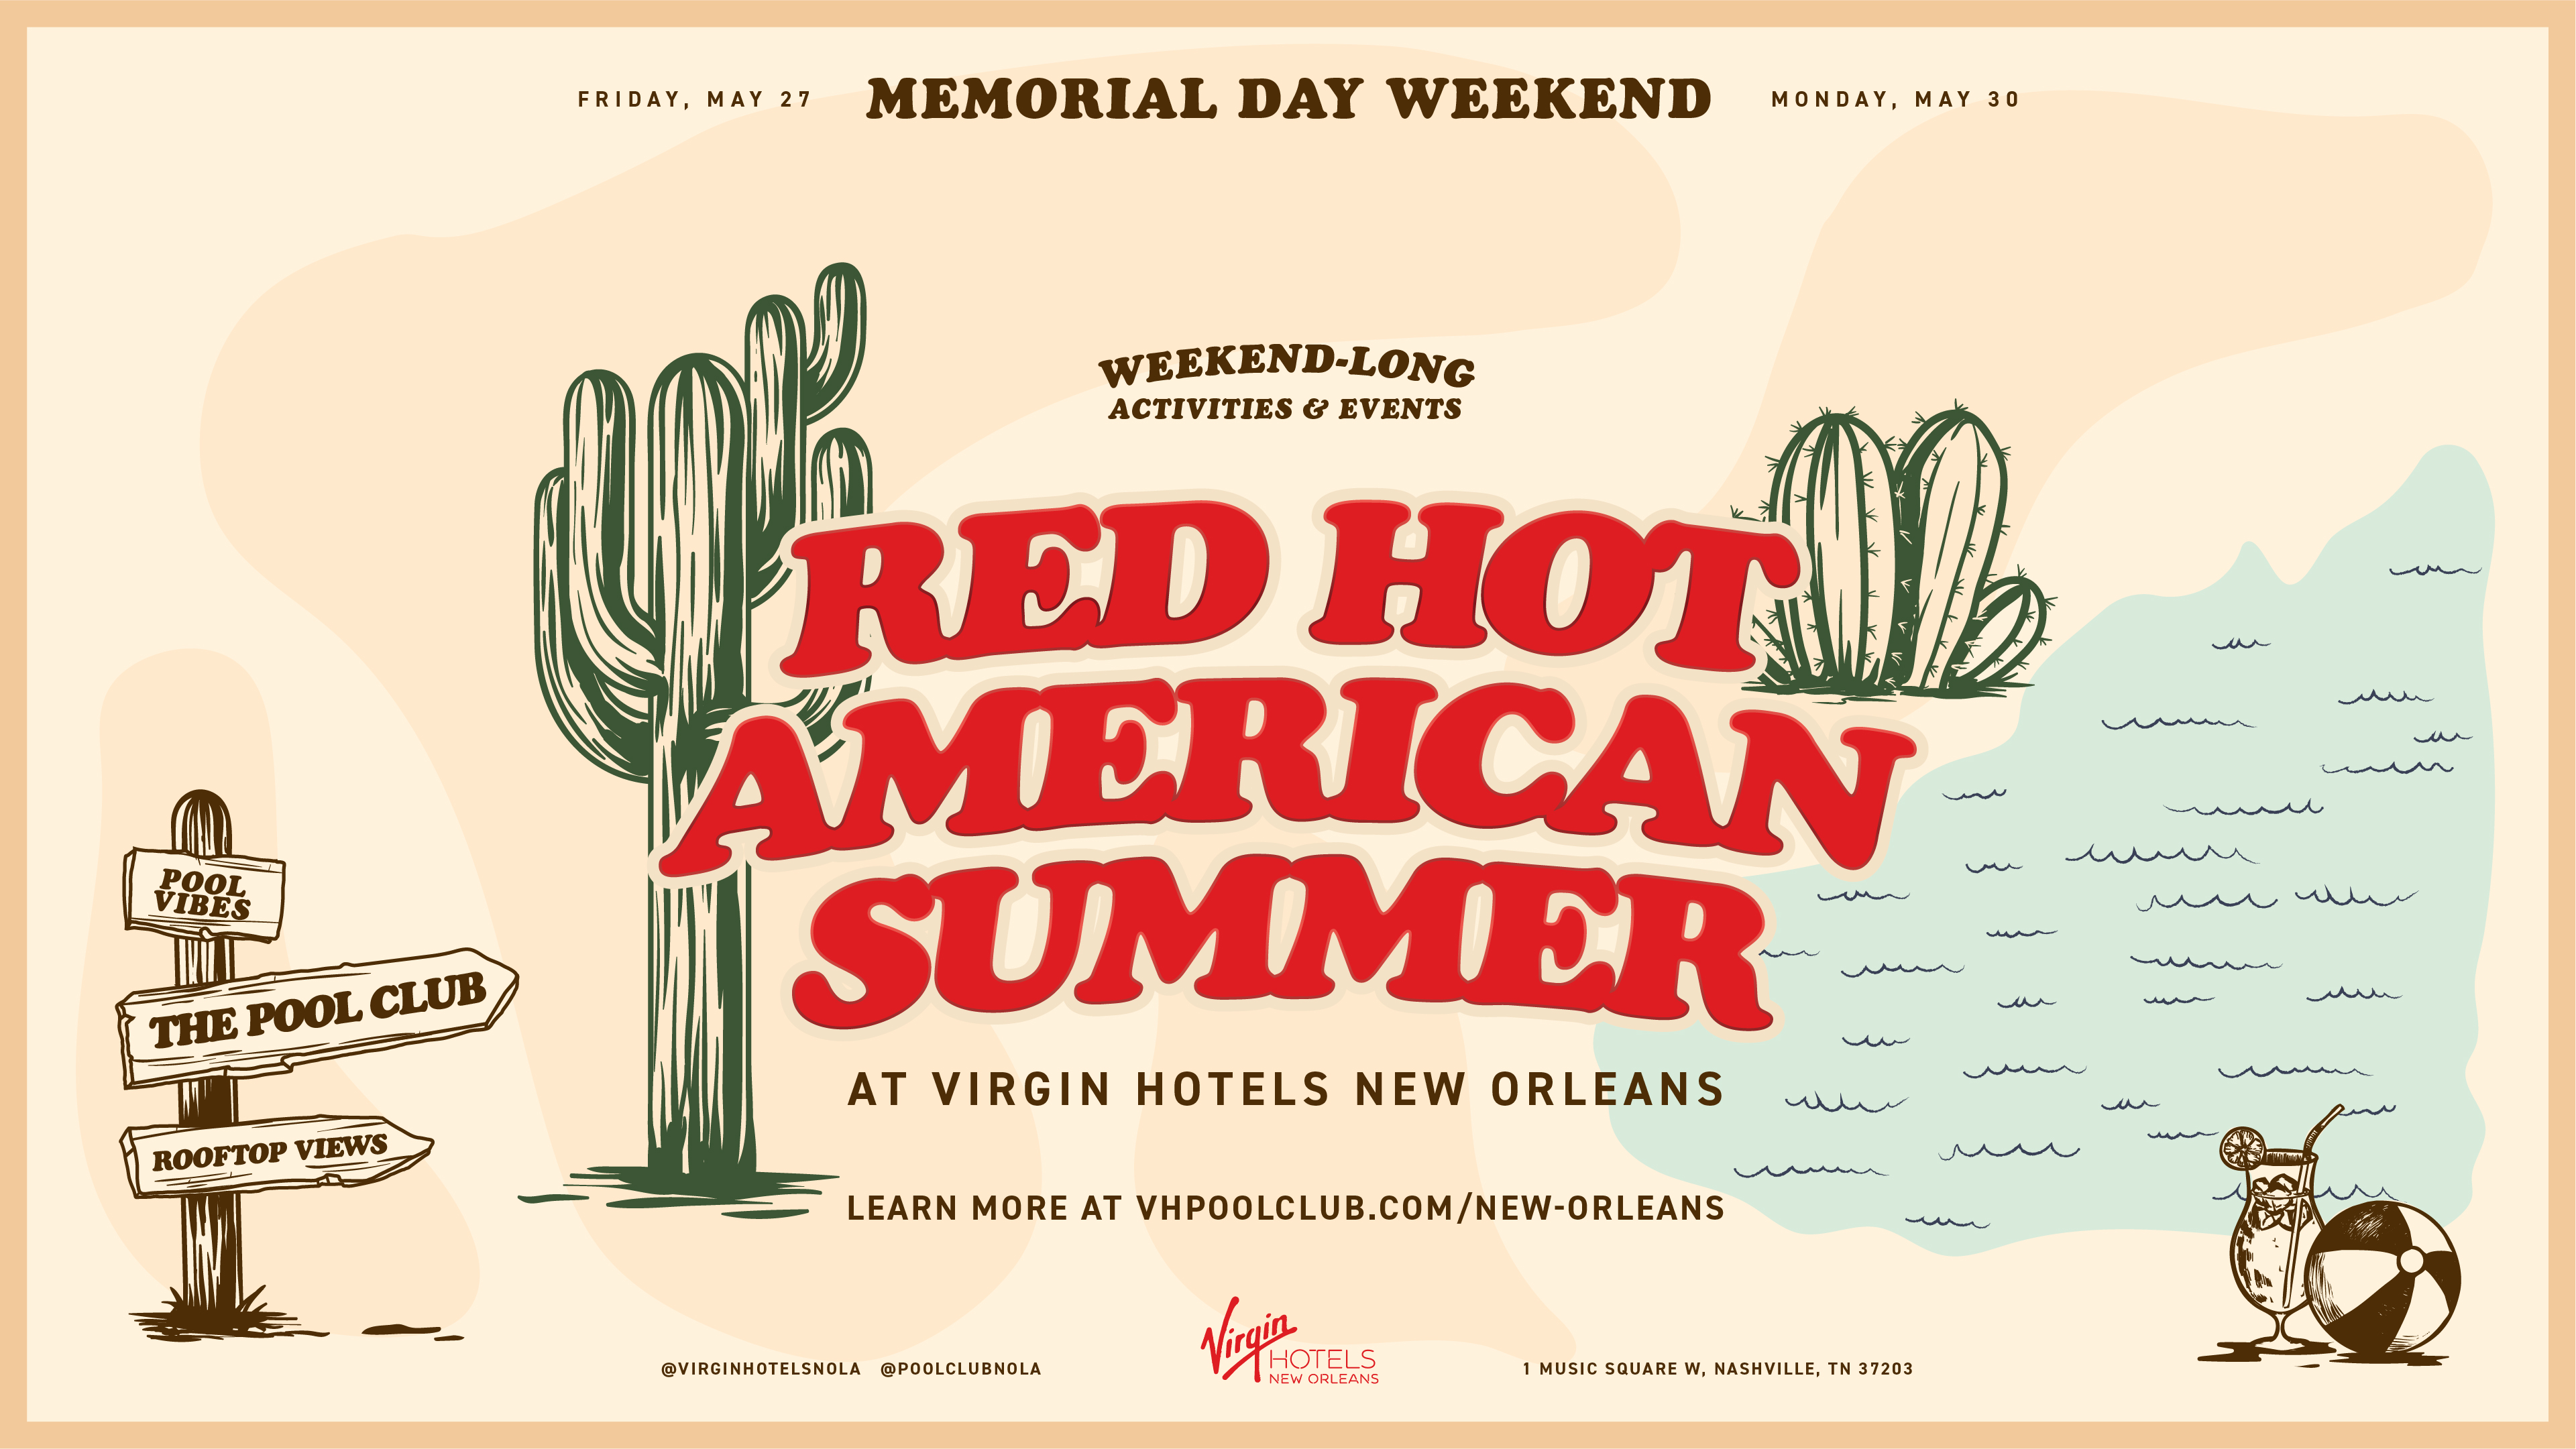 Virgin Hotels New Orleans Red Hot American Summer (Memorial Day Weekend)